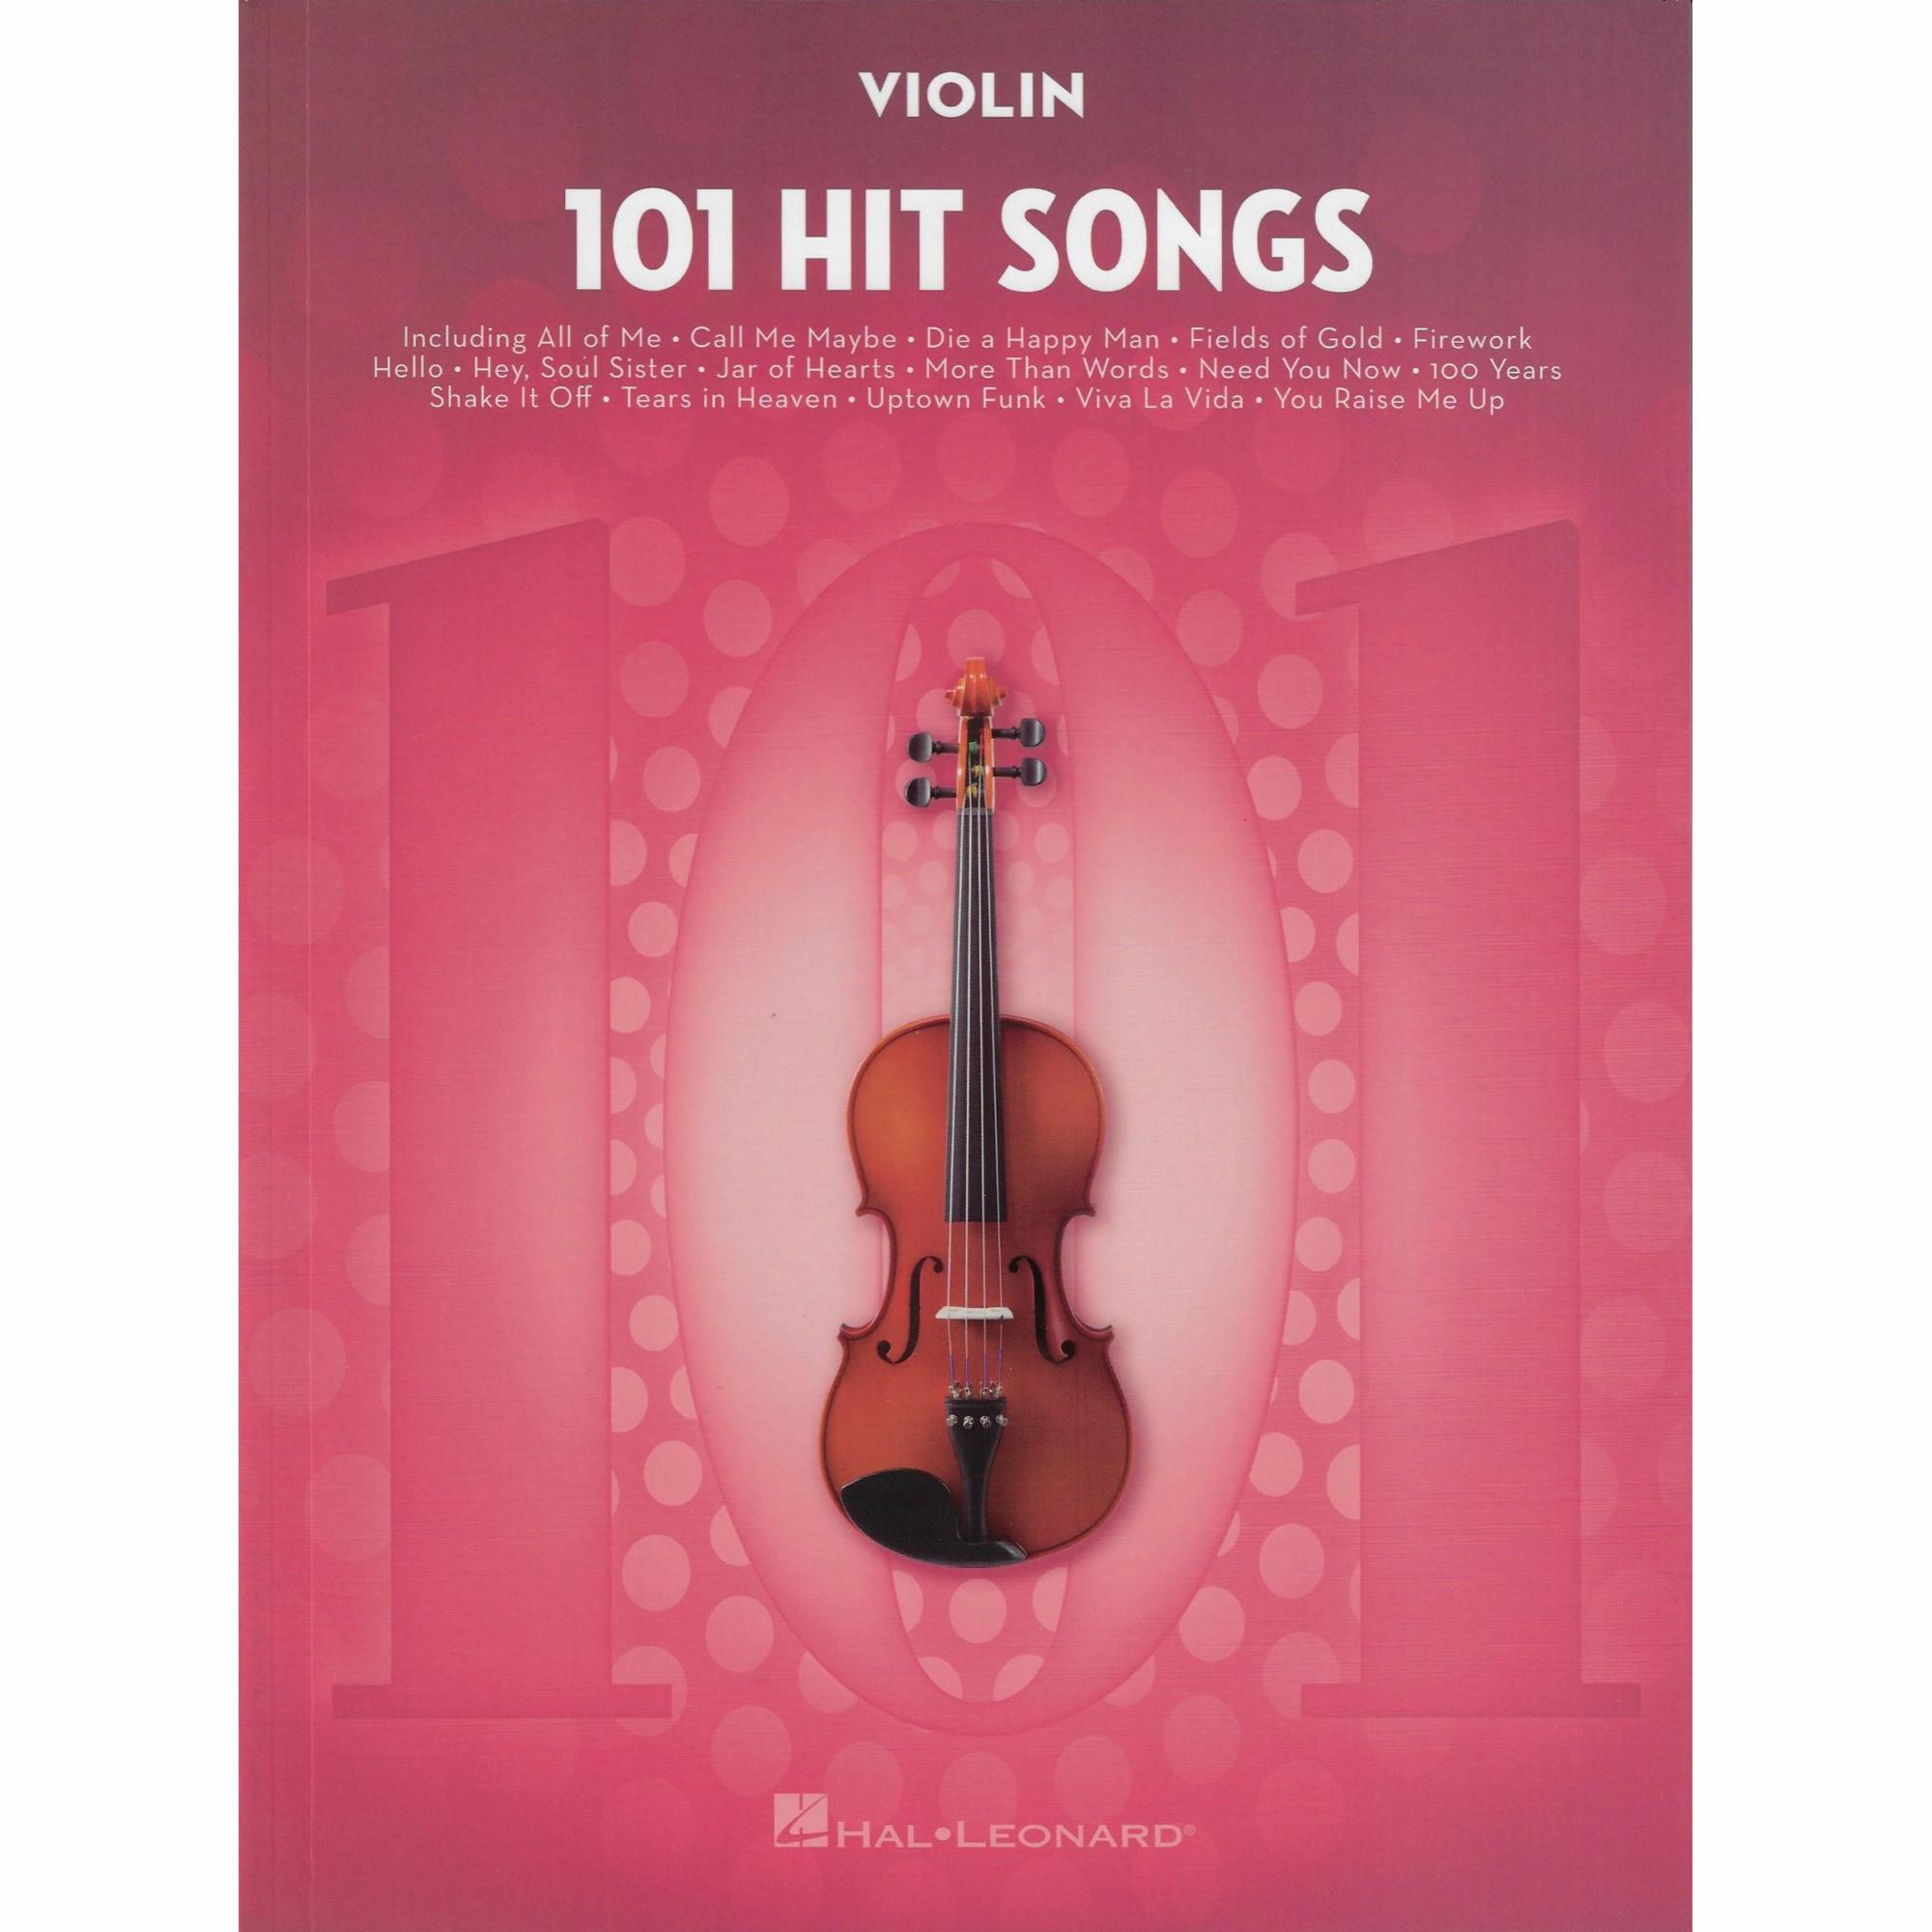 101 Hit Songs for Violin, Viola, or Cello